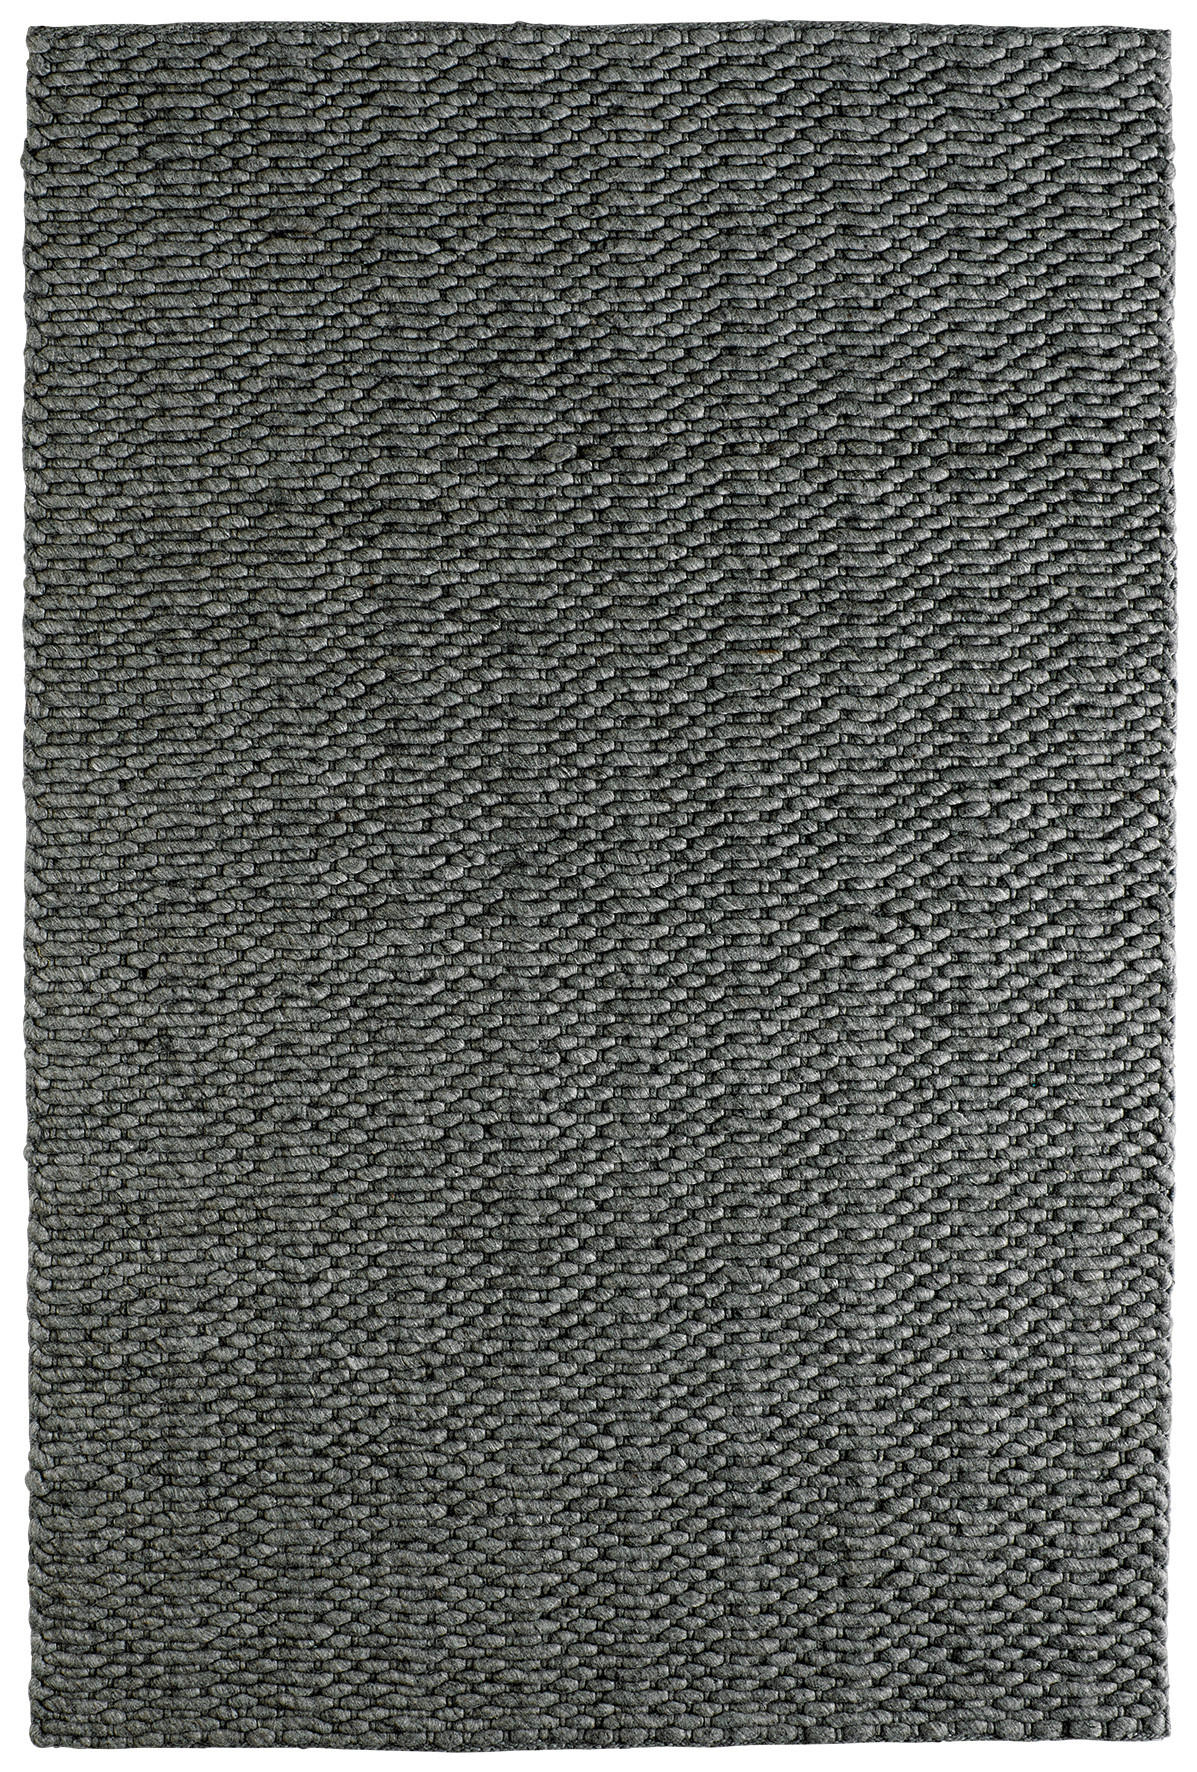 HANDWEBTEPPICH 80/150 cm  - Graphitfarben, Basics, Textil (80/150cm) - Linea Natura